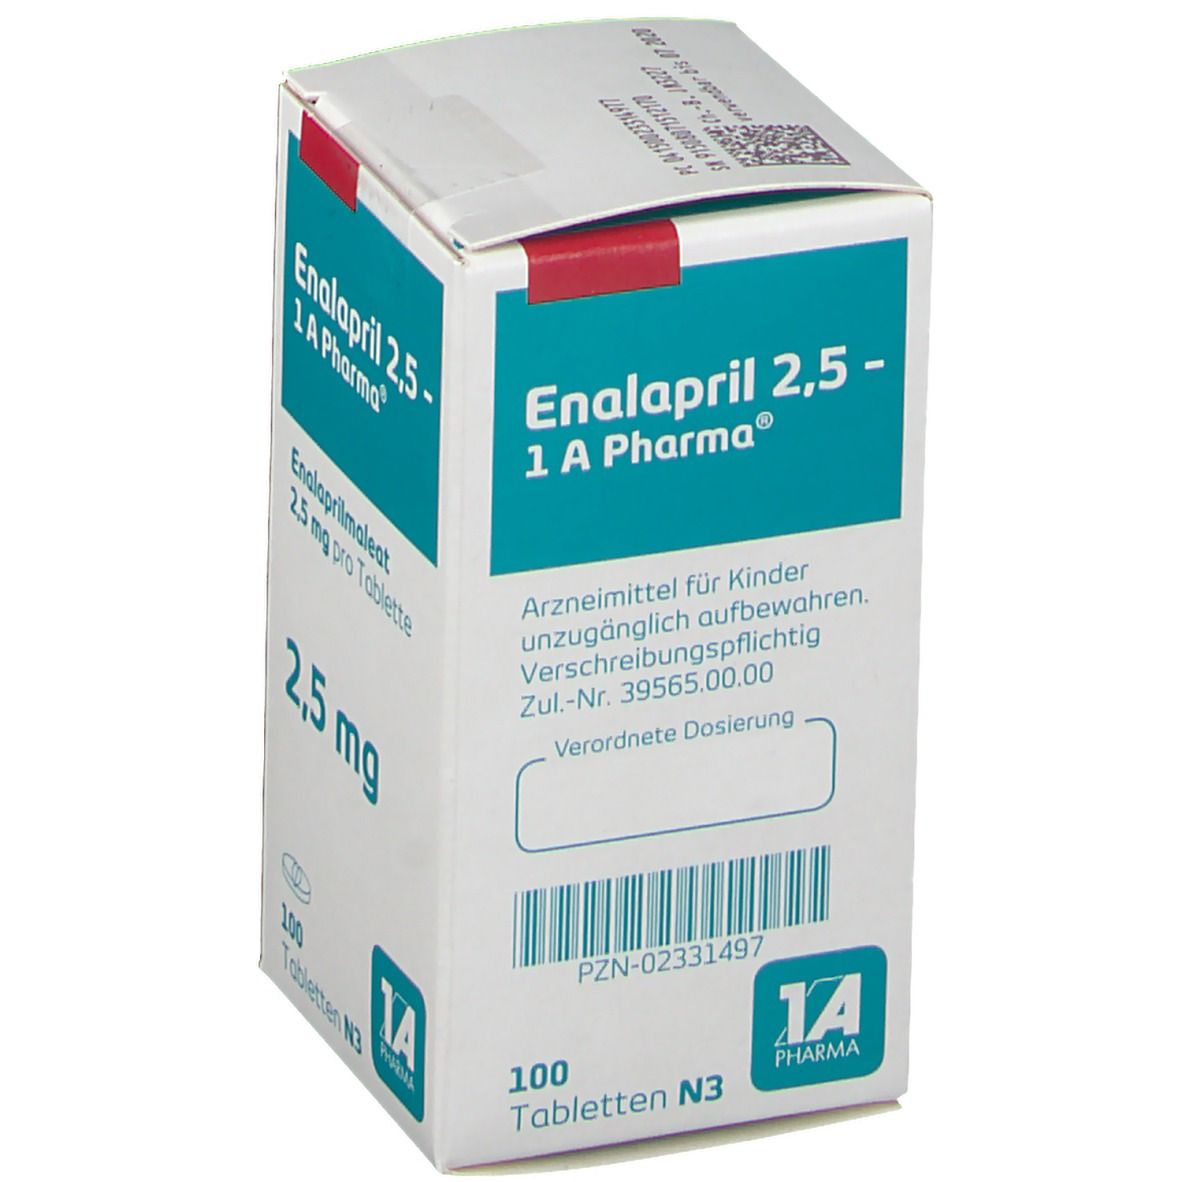 Enalapril 2.5 - 1A Pharma®